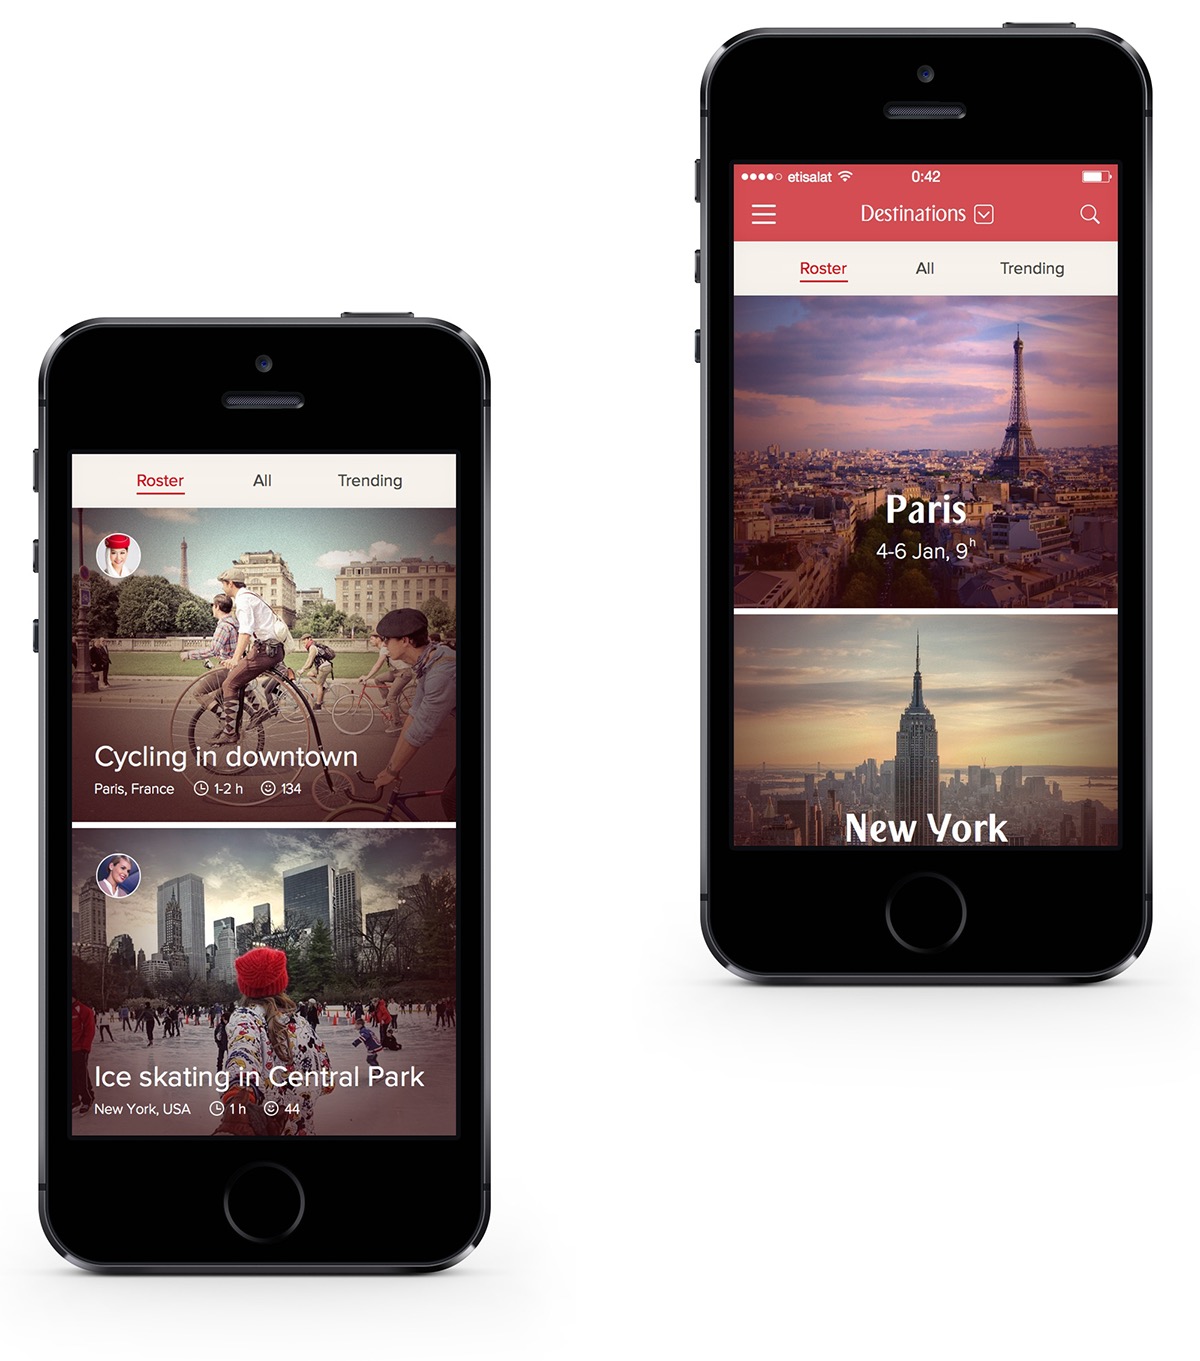 emirates ios iphone application concept Arab discover Real progress fullscreen images